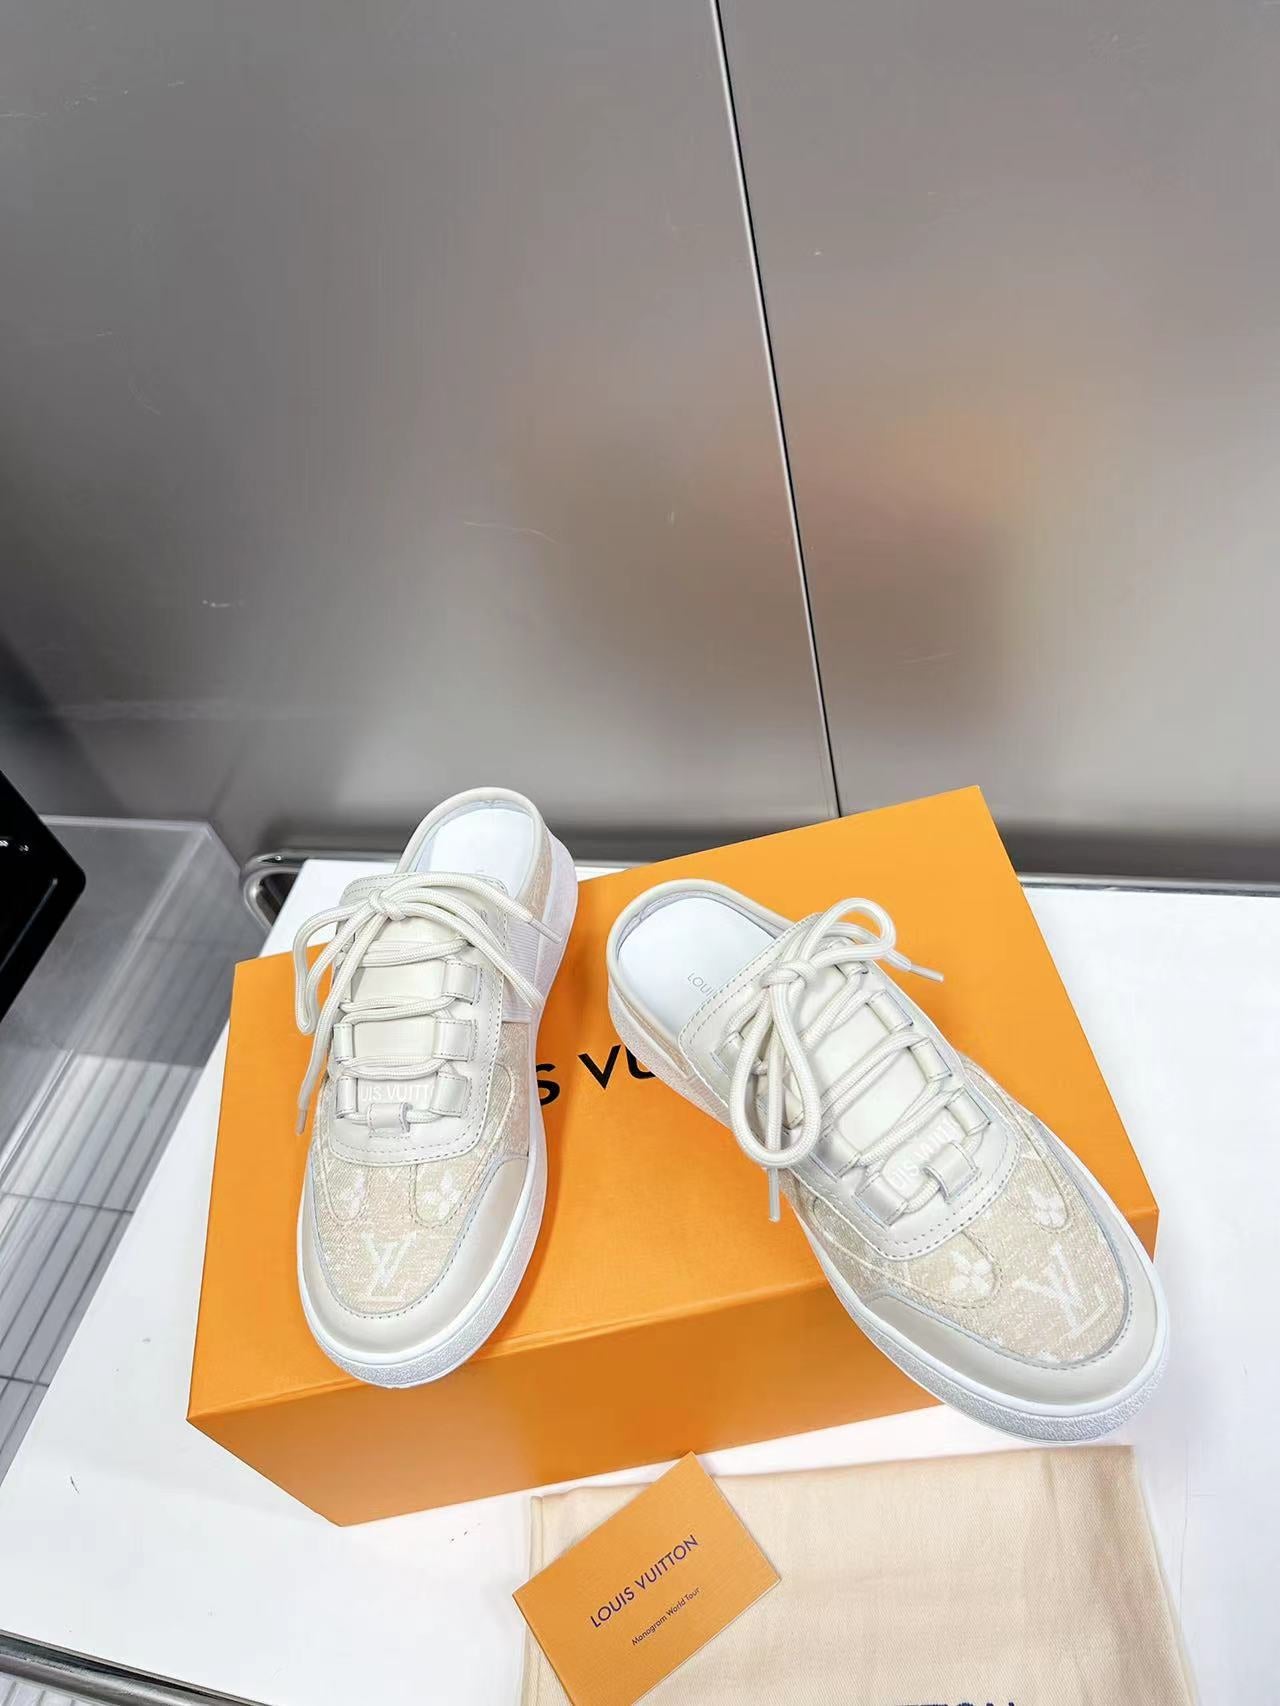 Louis Vuitton Lous Open Back Sneaker Grey. Size 38.0